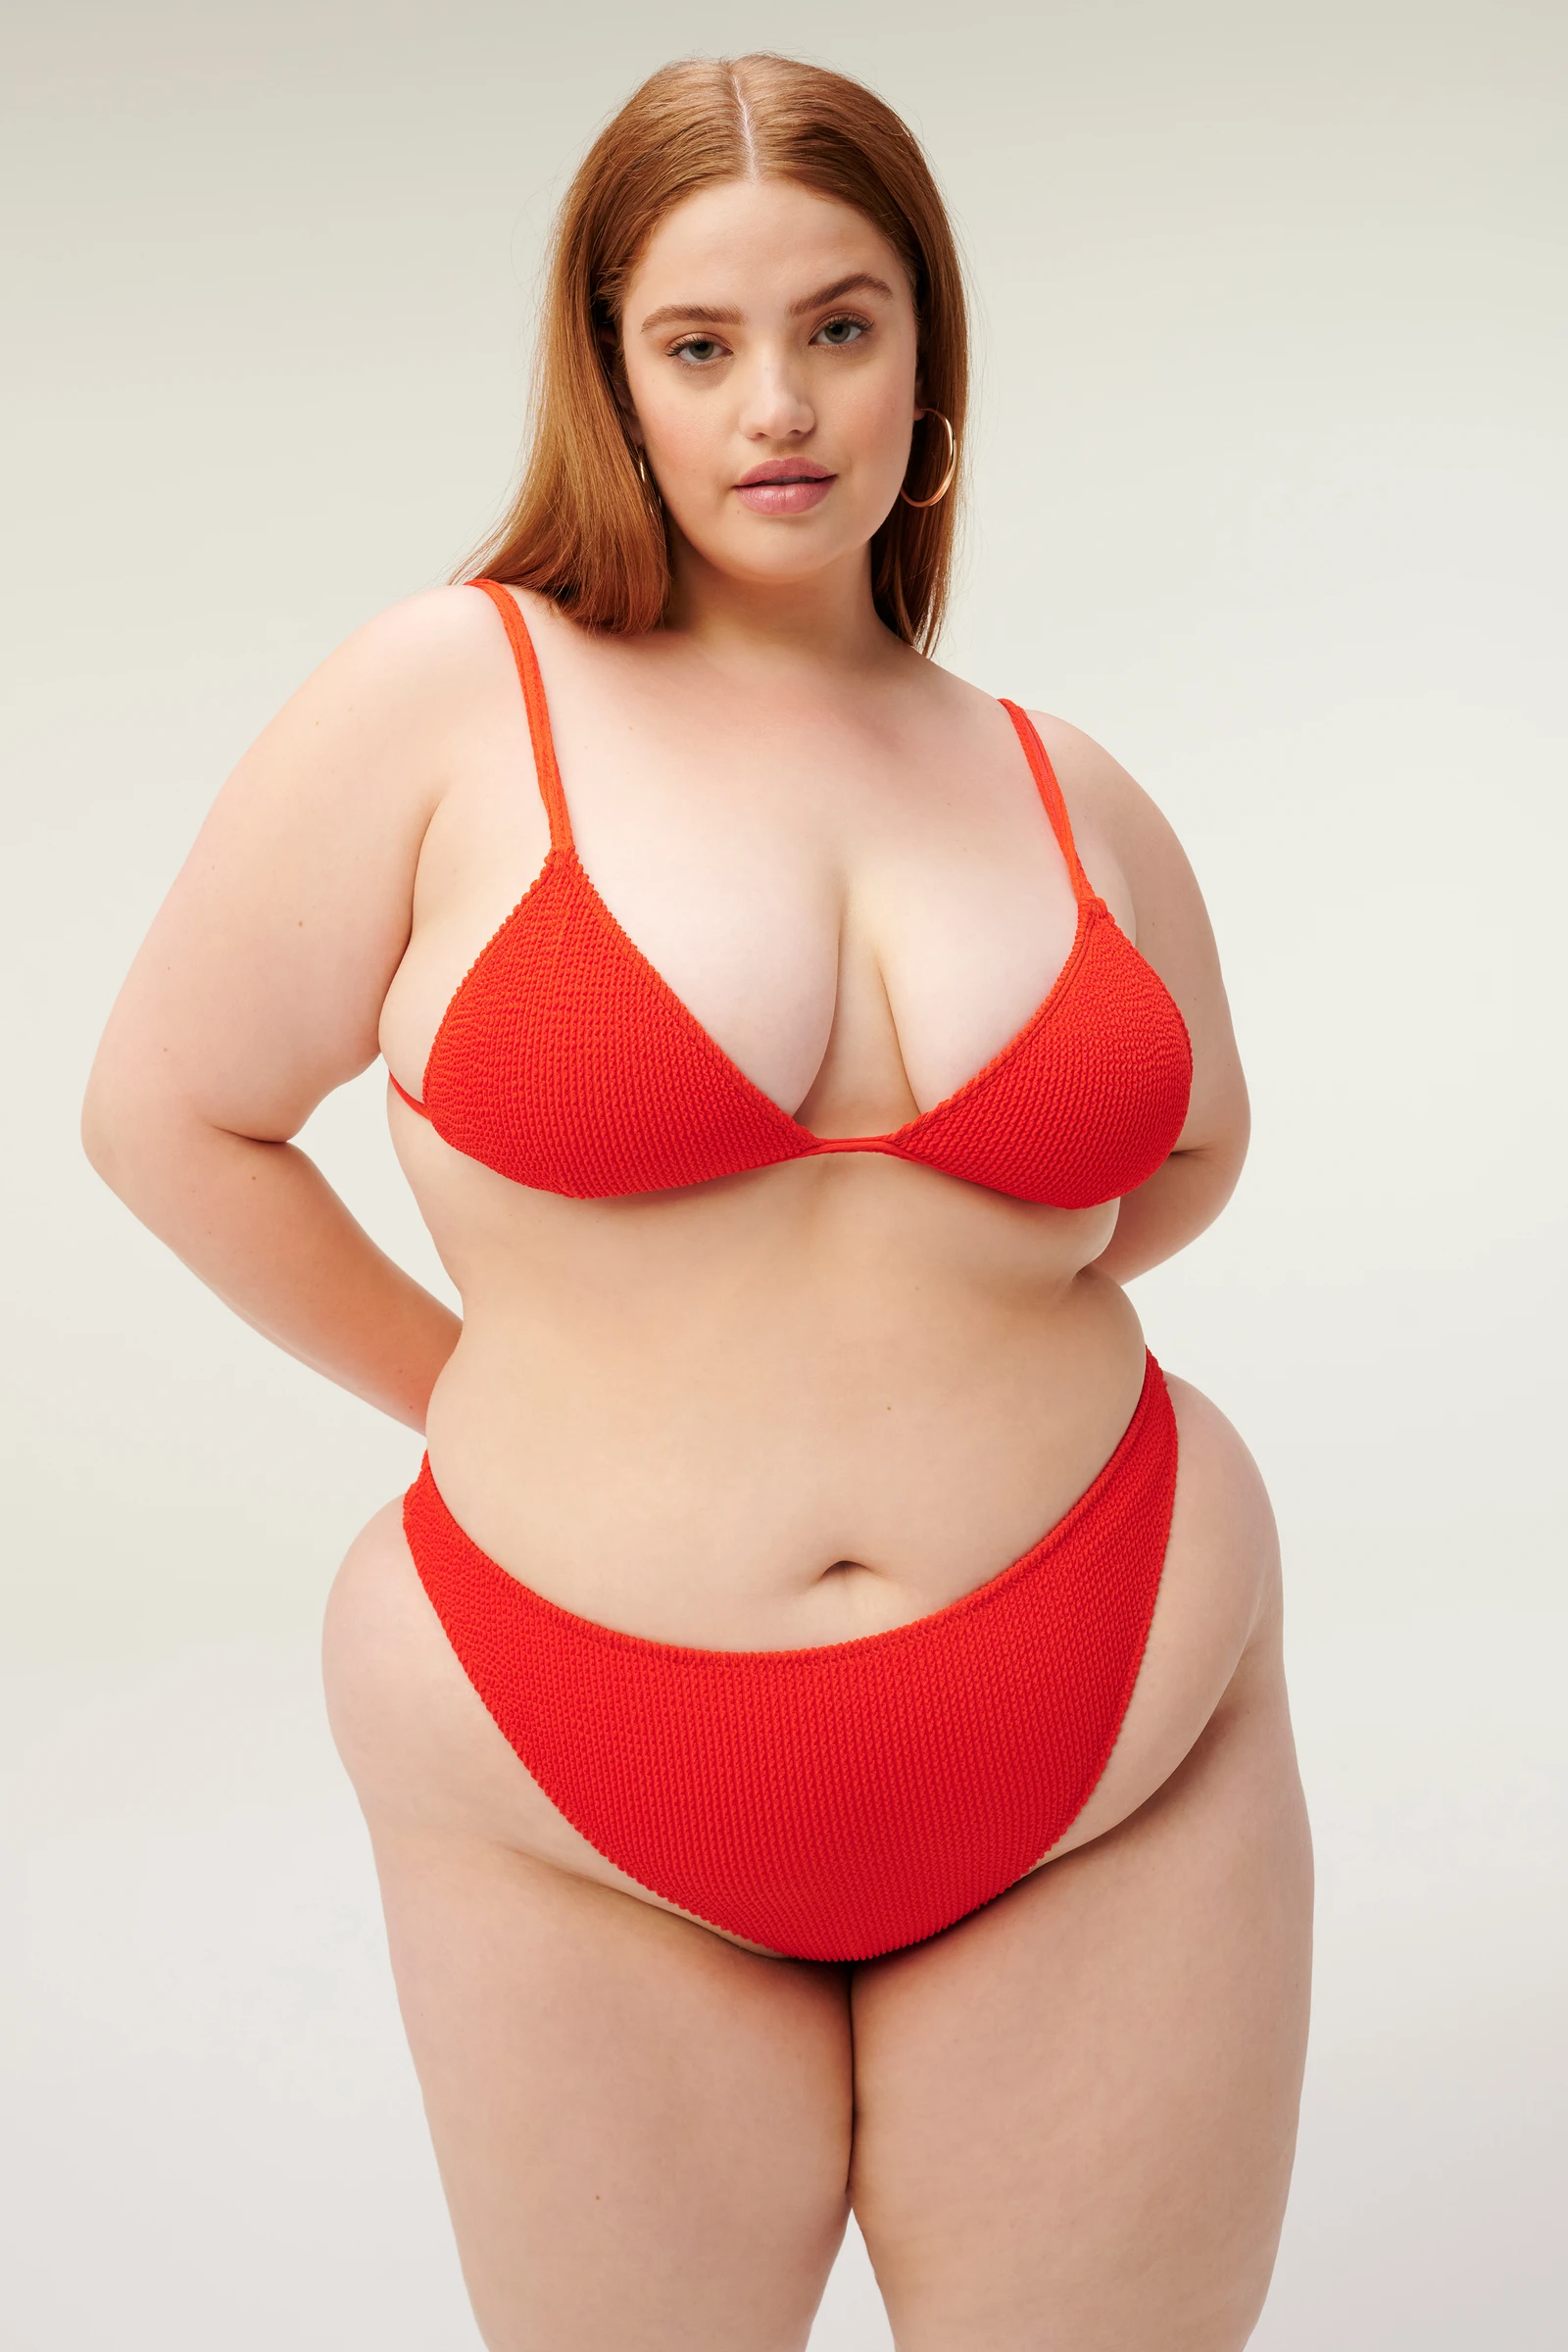 Large bikini models